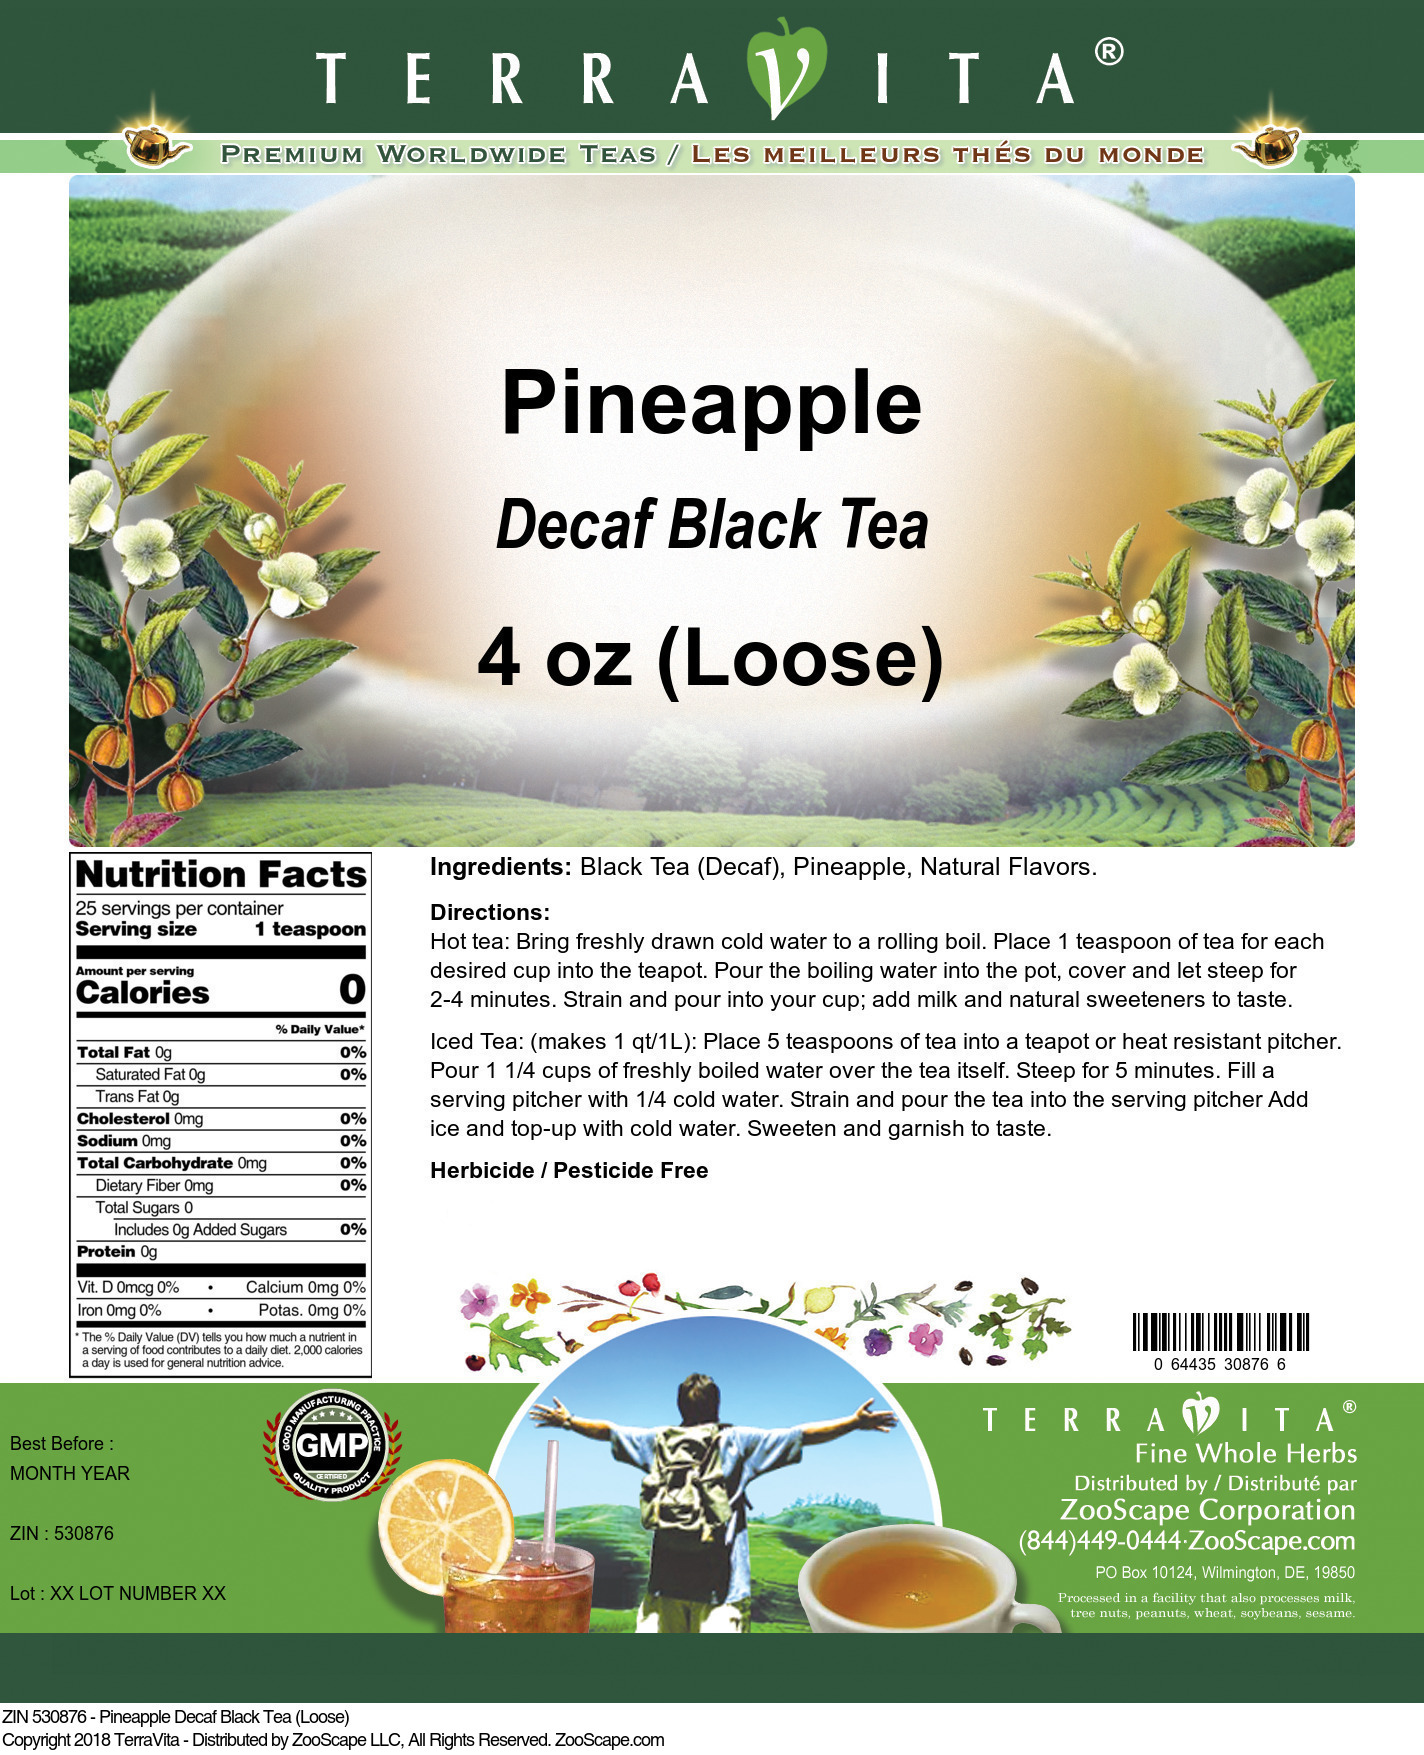 Pineapple Decaf Black Tea (Loose) - Label